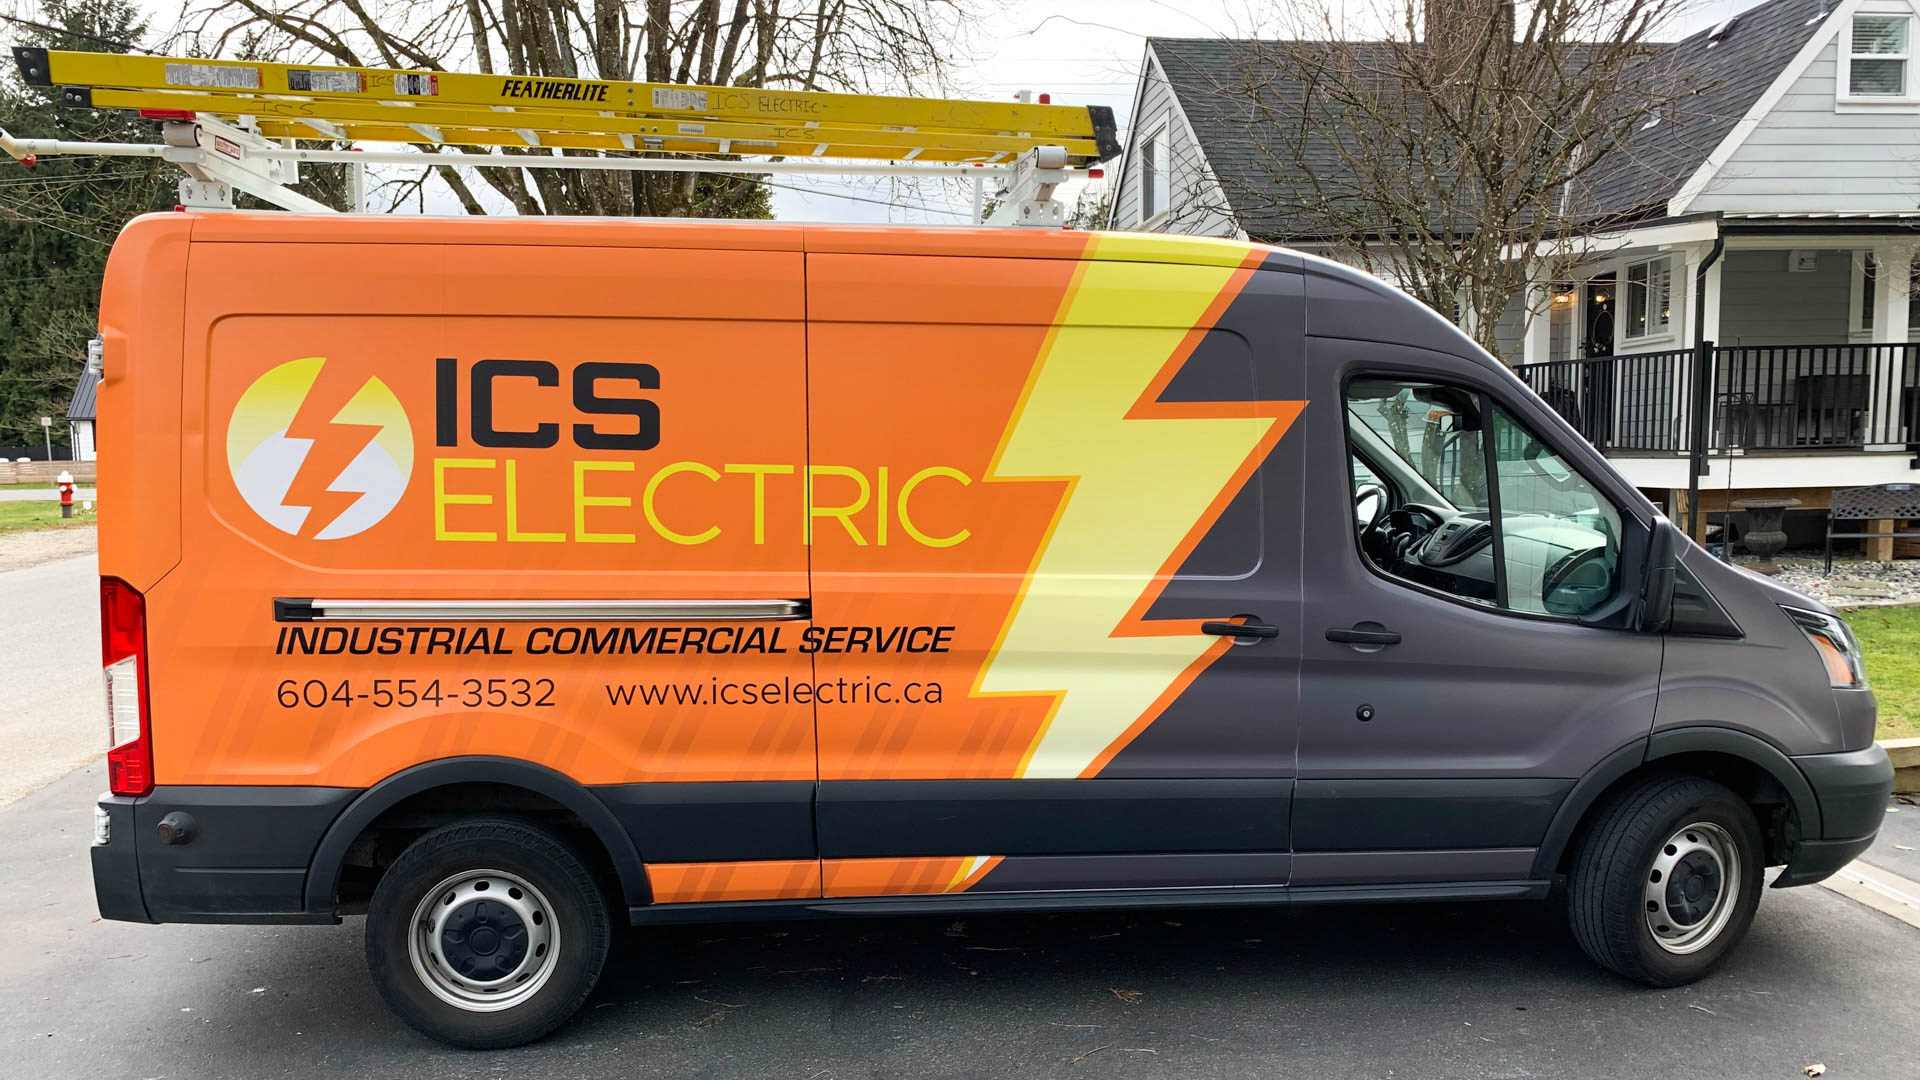 The ICS Electric service van